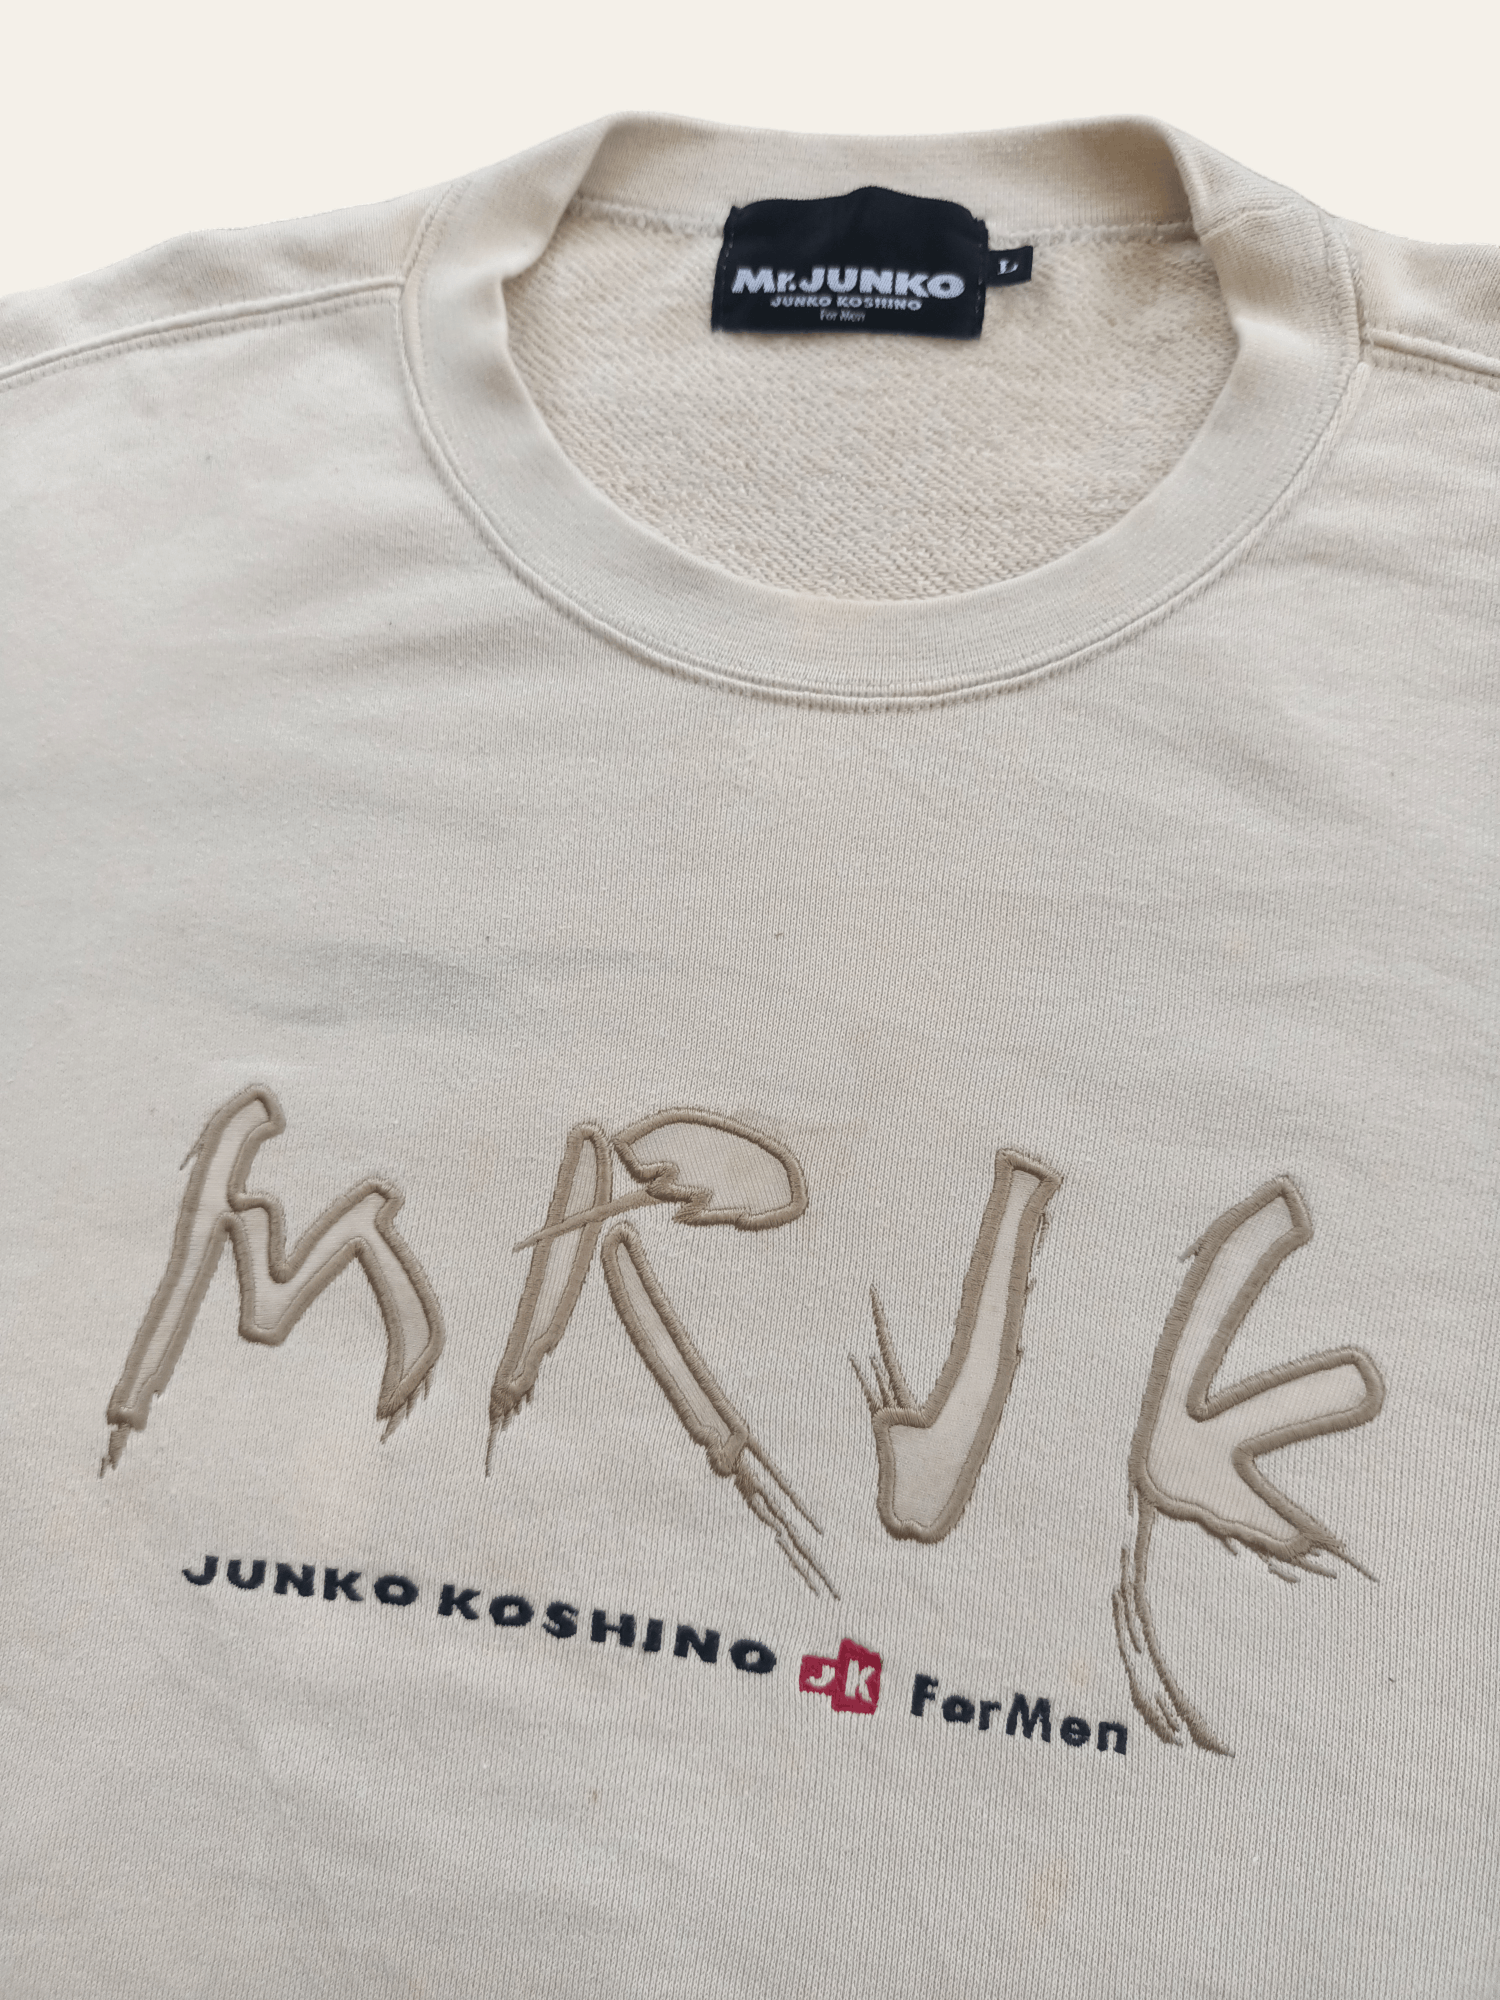 Vintage MR JUNKO KOSHINO Homme Made in Japan Sweatshirt - 3